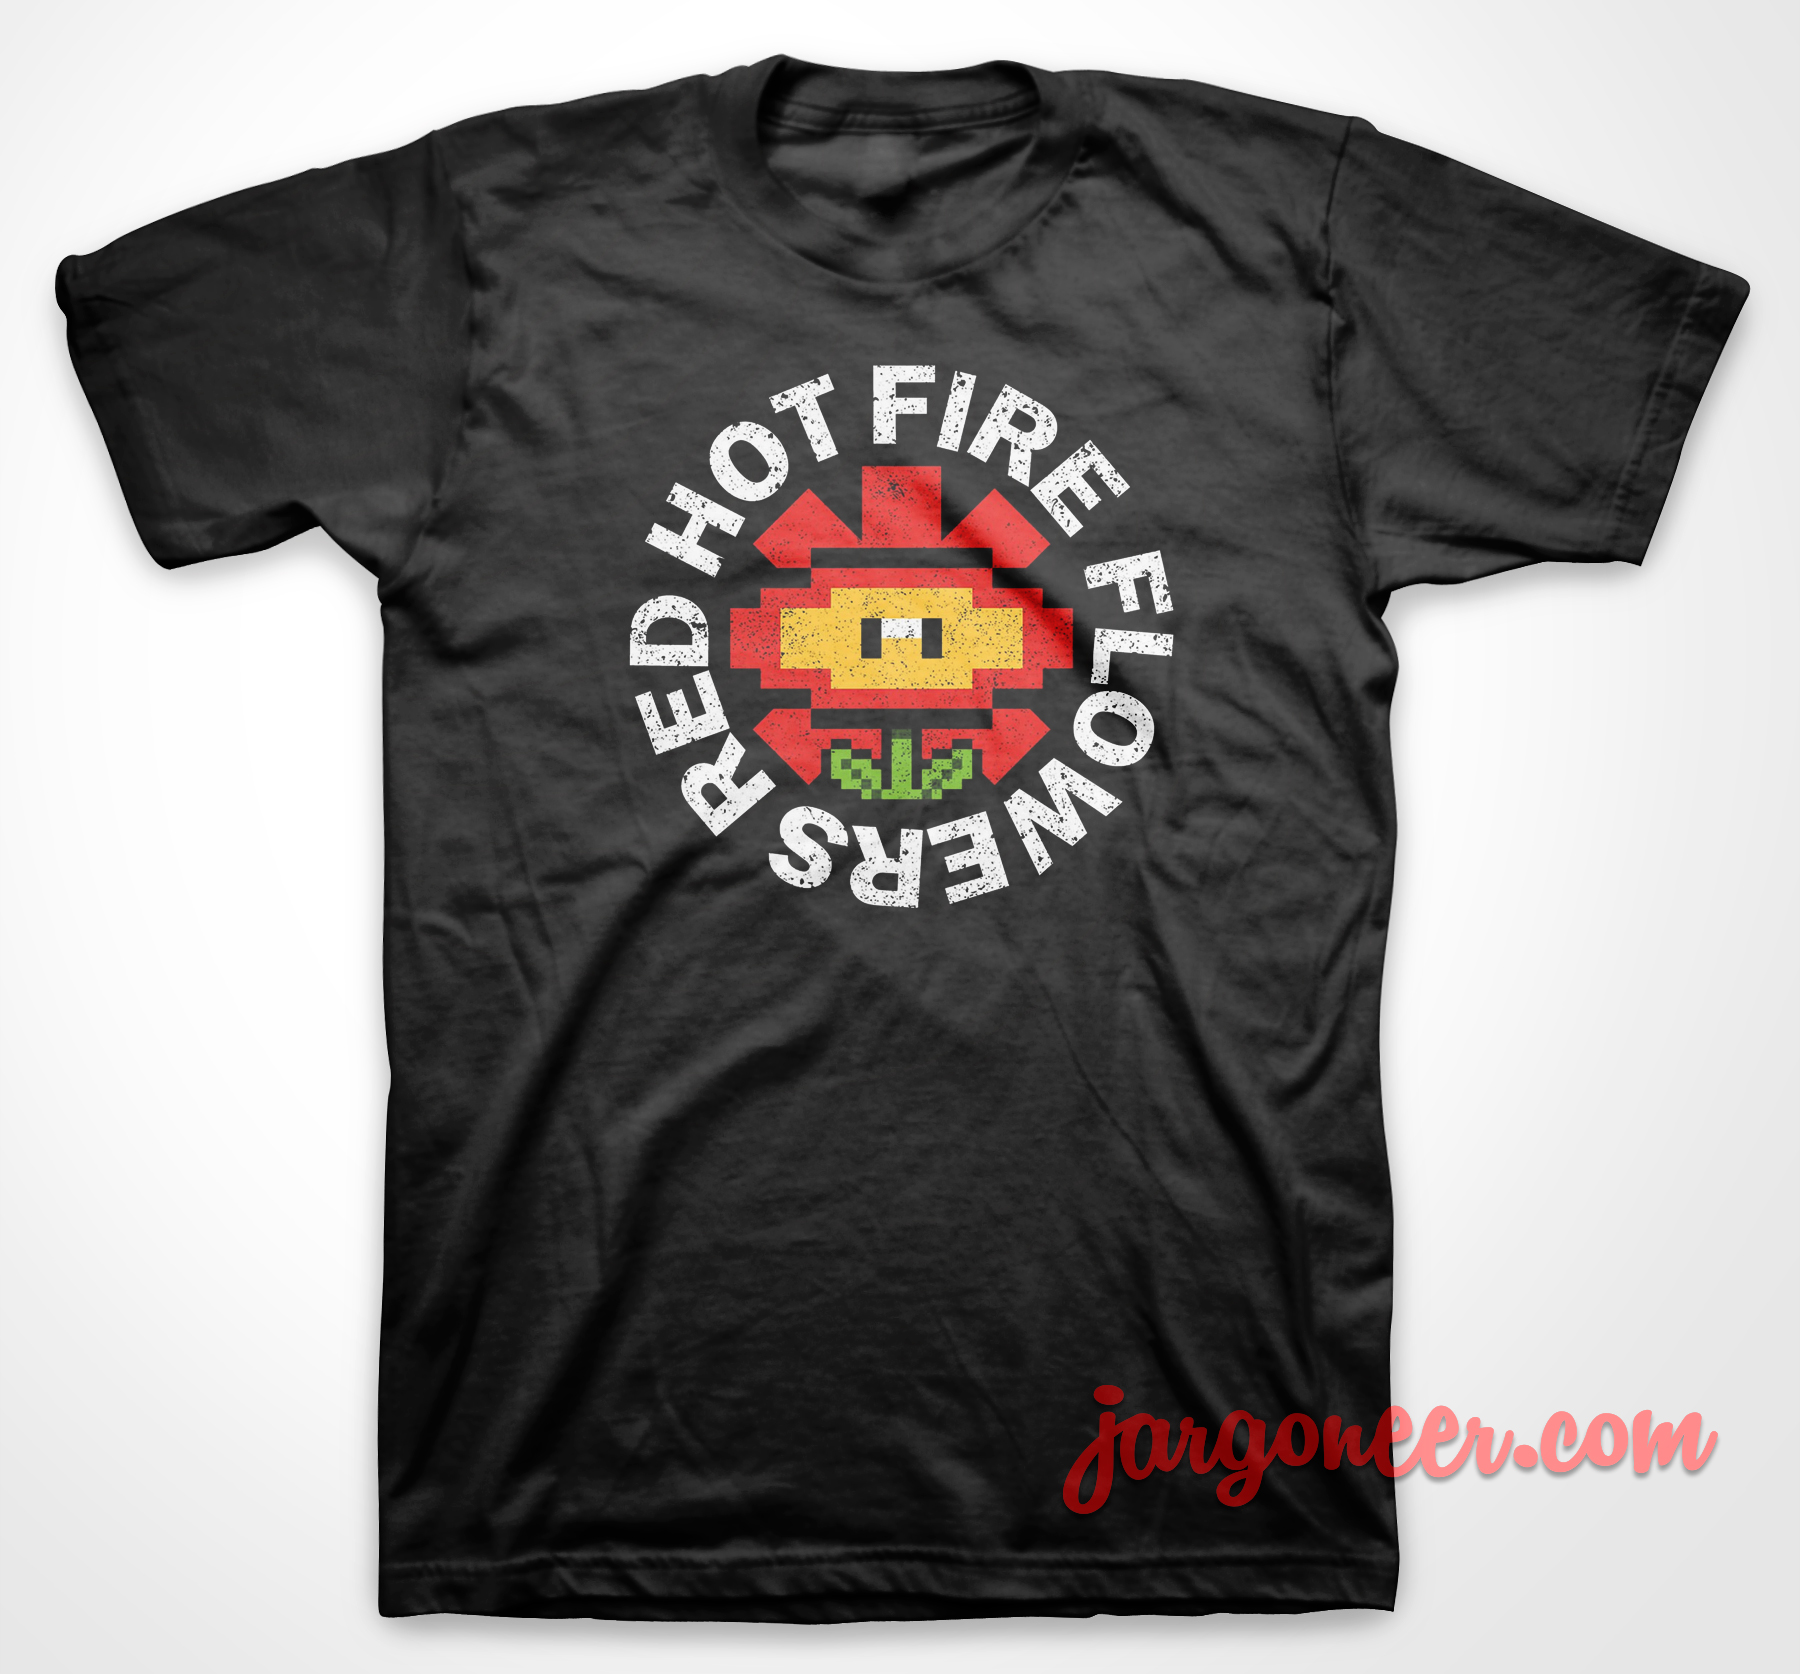 Red Hot Fire Flowers Parody - Shop Unique Graphic Cool Shirt Designs